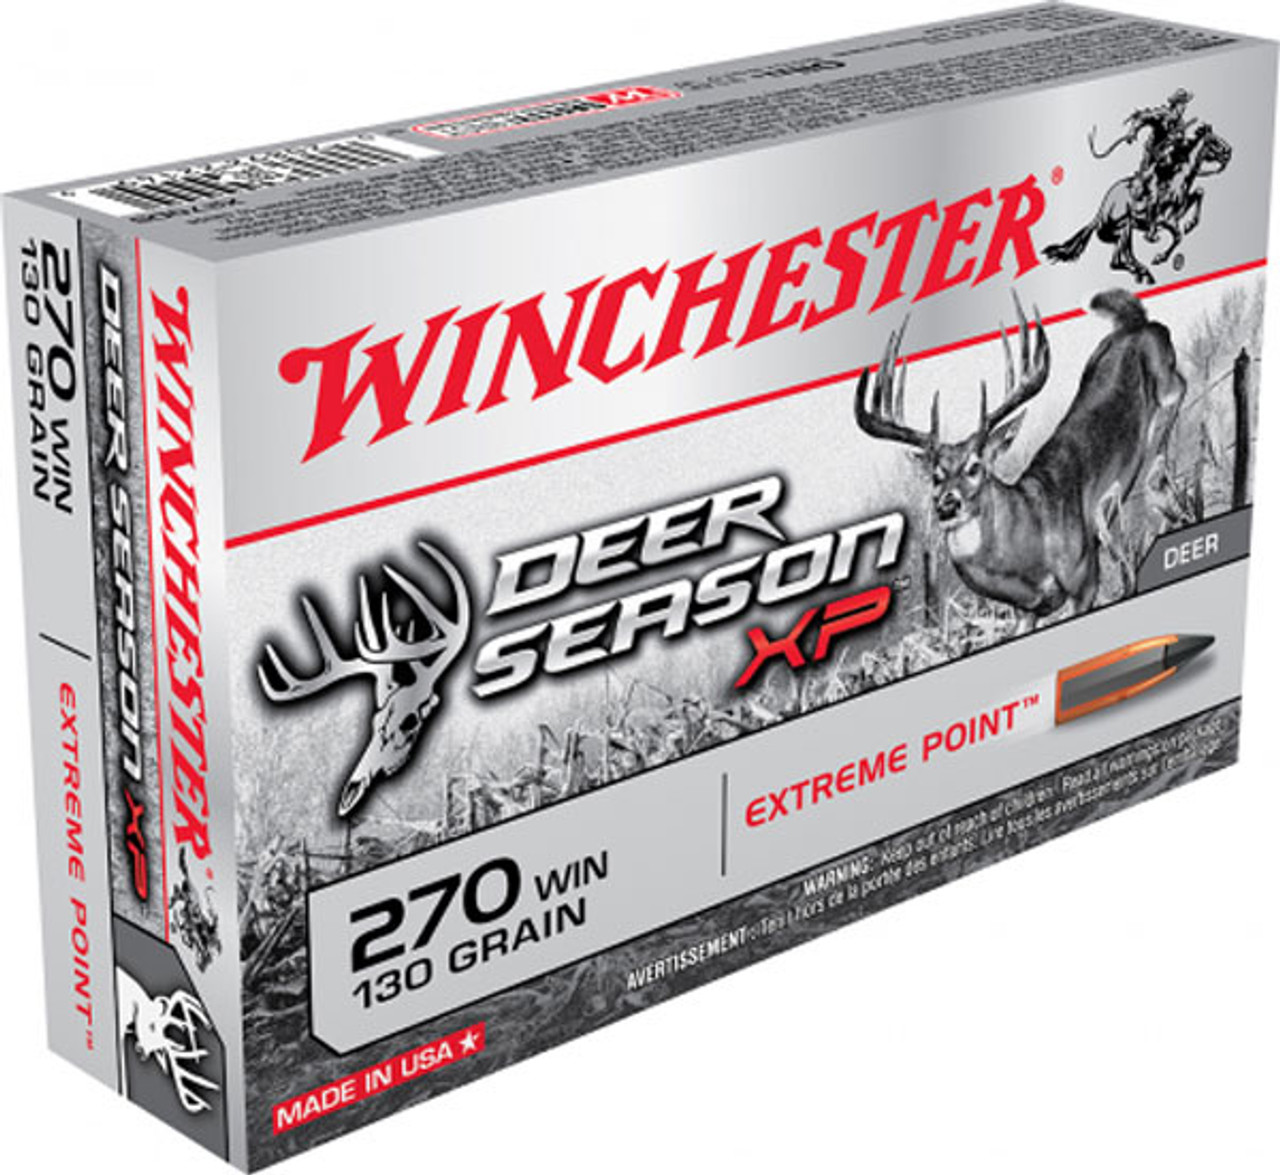 20 Win, 130 Grain, : Season, Box Ammunition 020892221499 Round Point Deer Tip, 270 Extreme Winchester X270DS, Polymer UPC